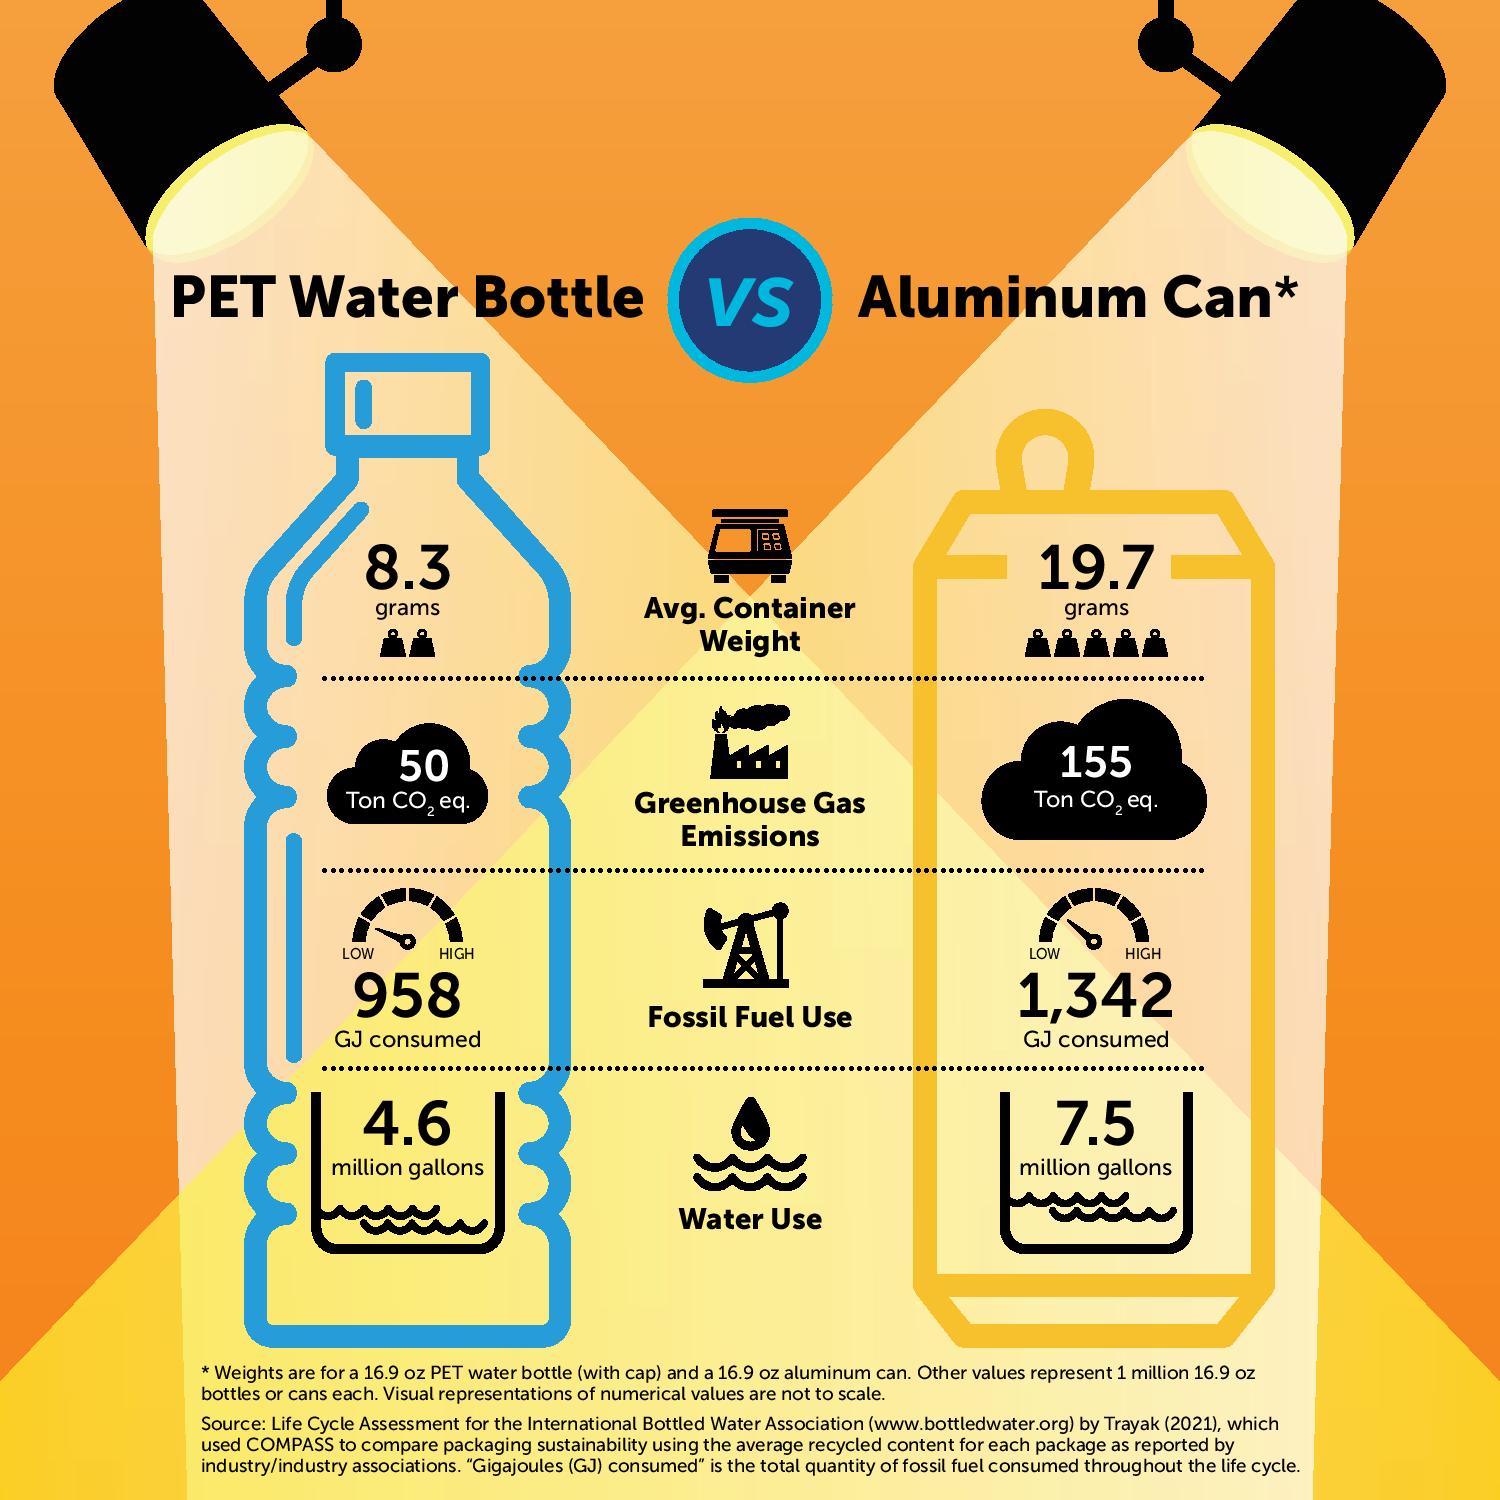 PET Water Bottle vs Aluminum Can